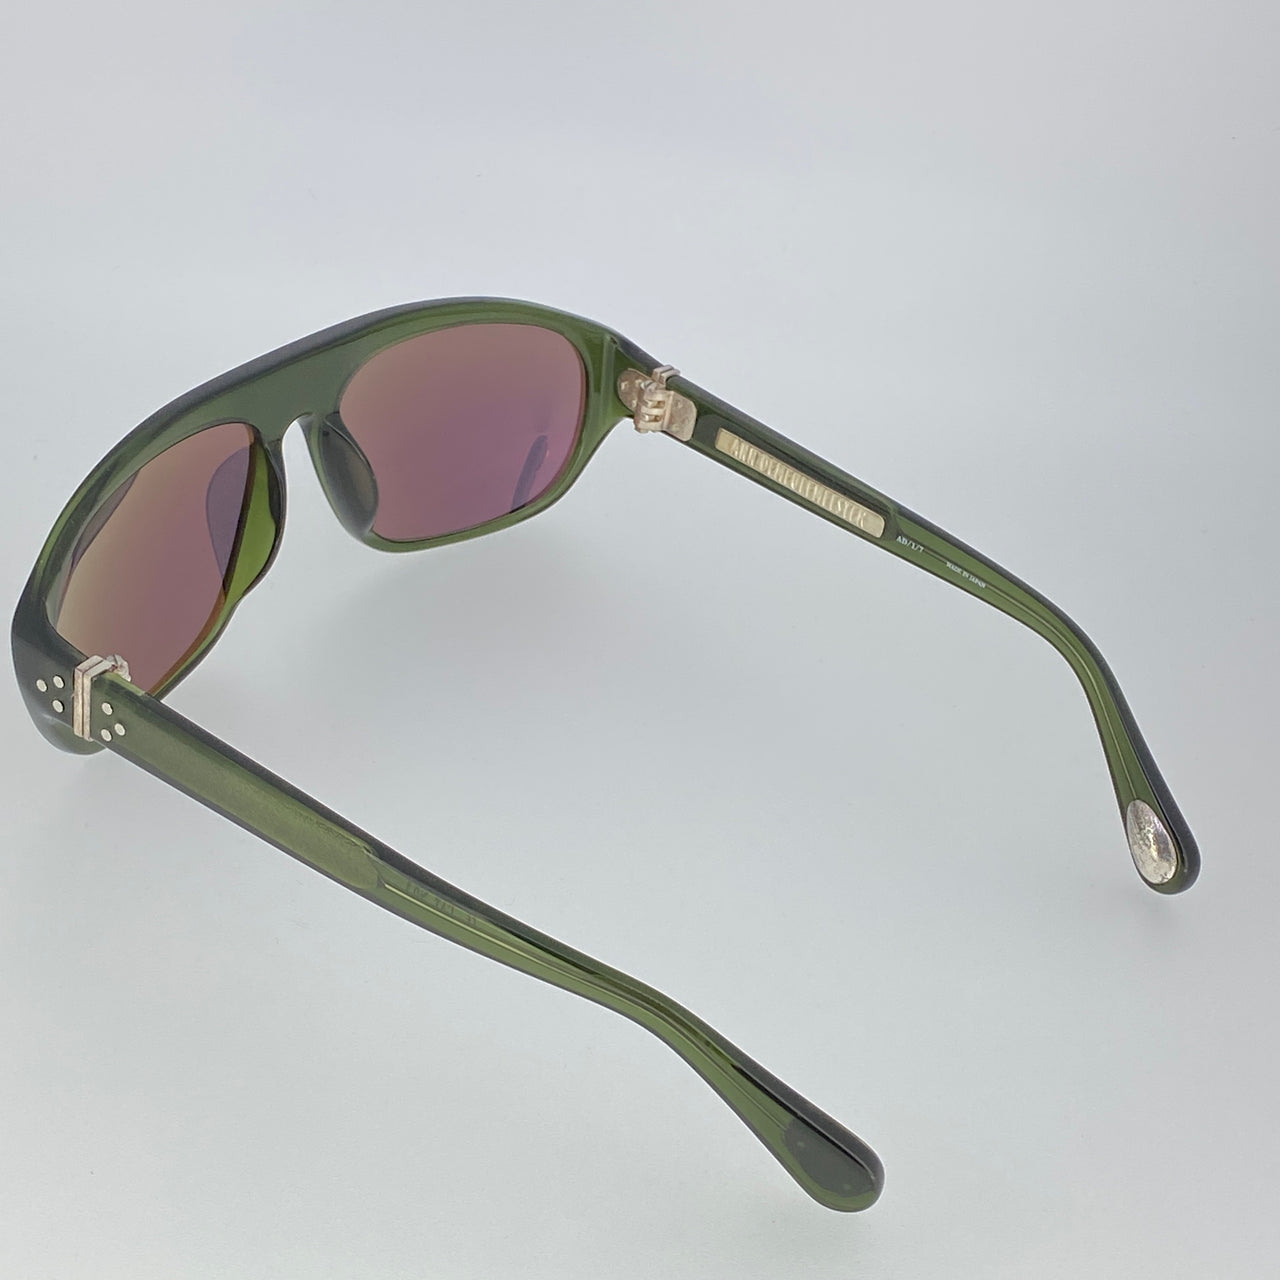 Ann Demeulemeester Men's Sunglasses Flat Top Green and Purple AD1C7SUN